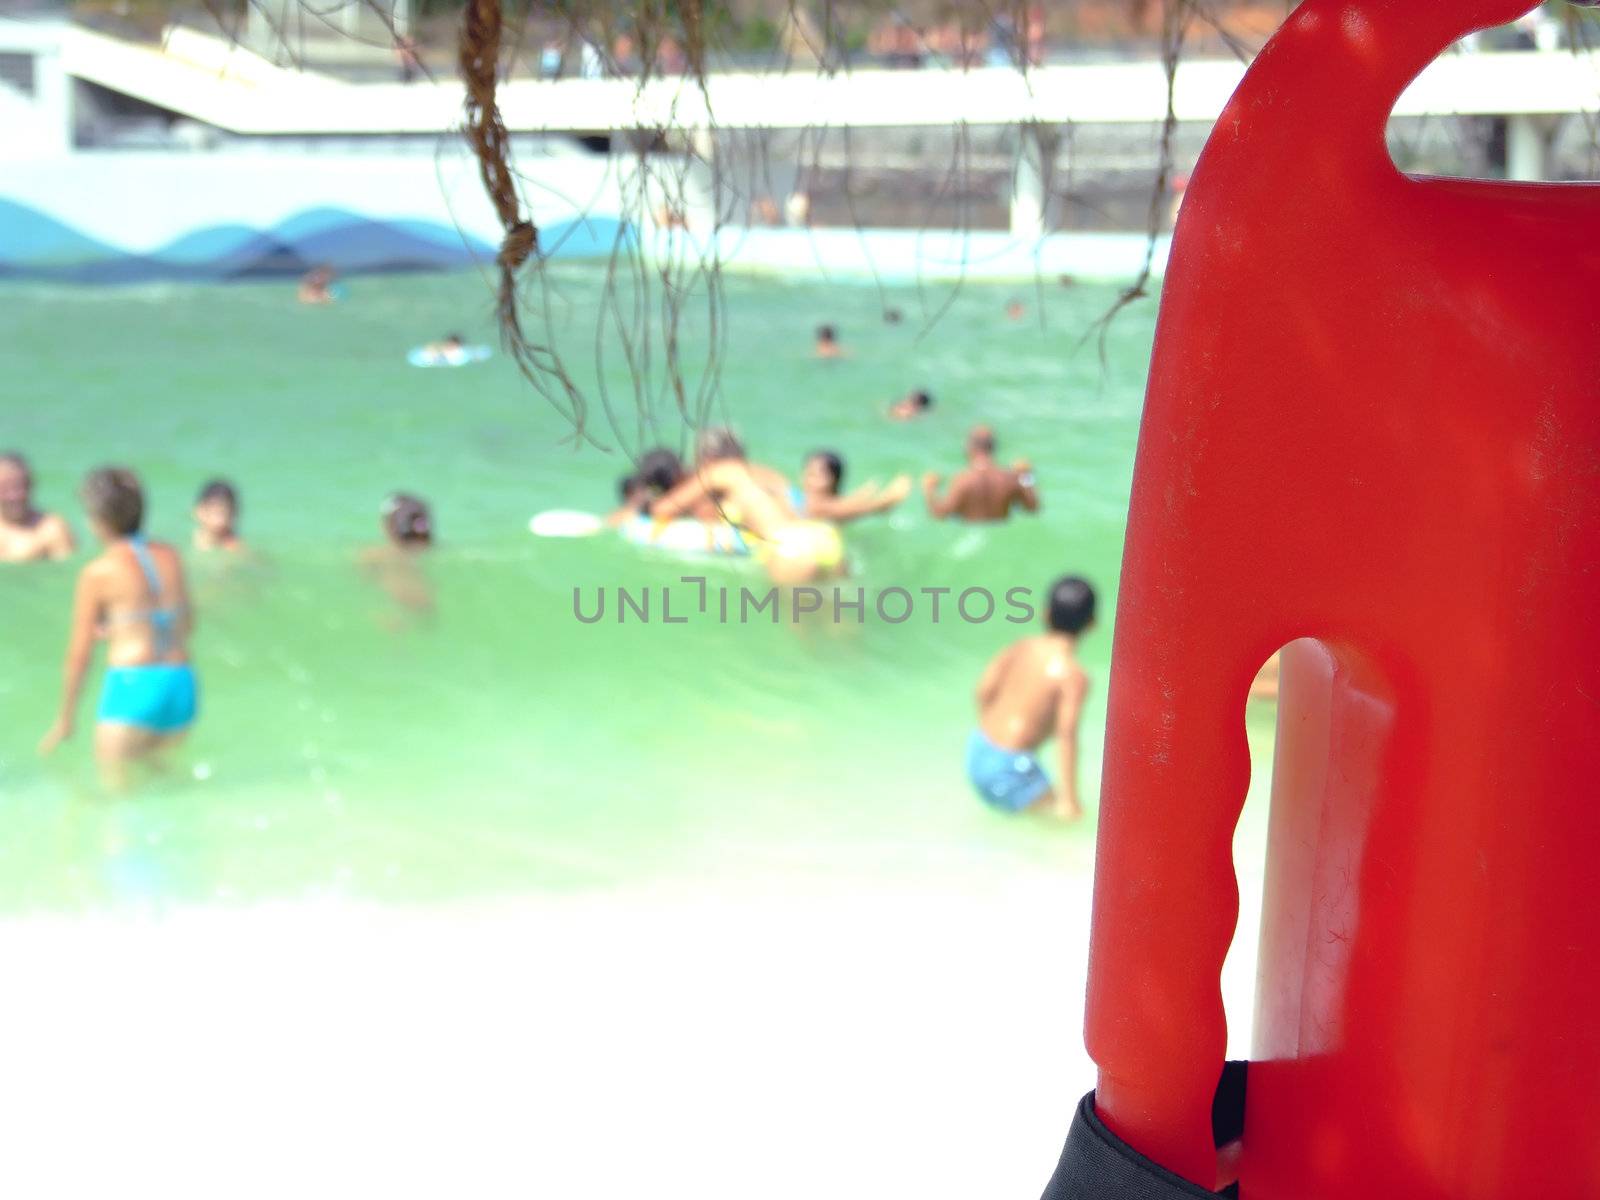 Lifegard buoy with DOF into the pool